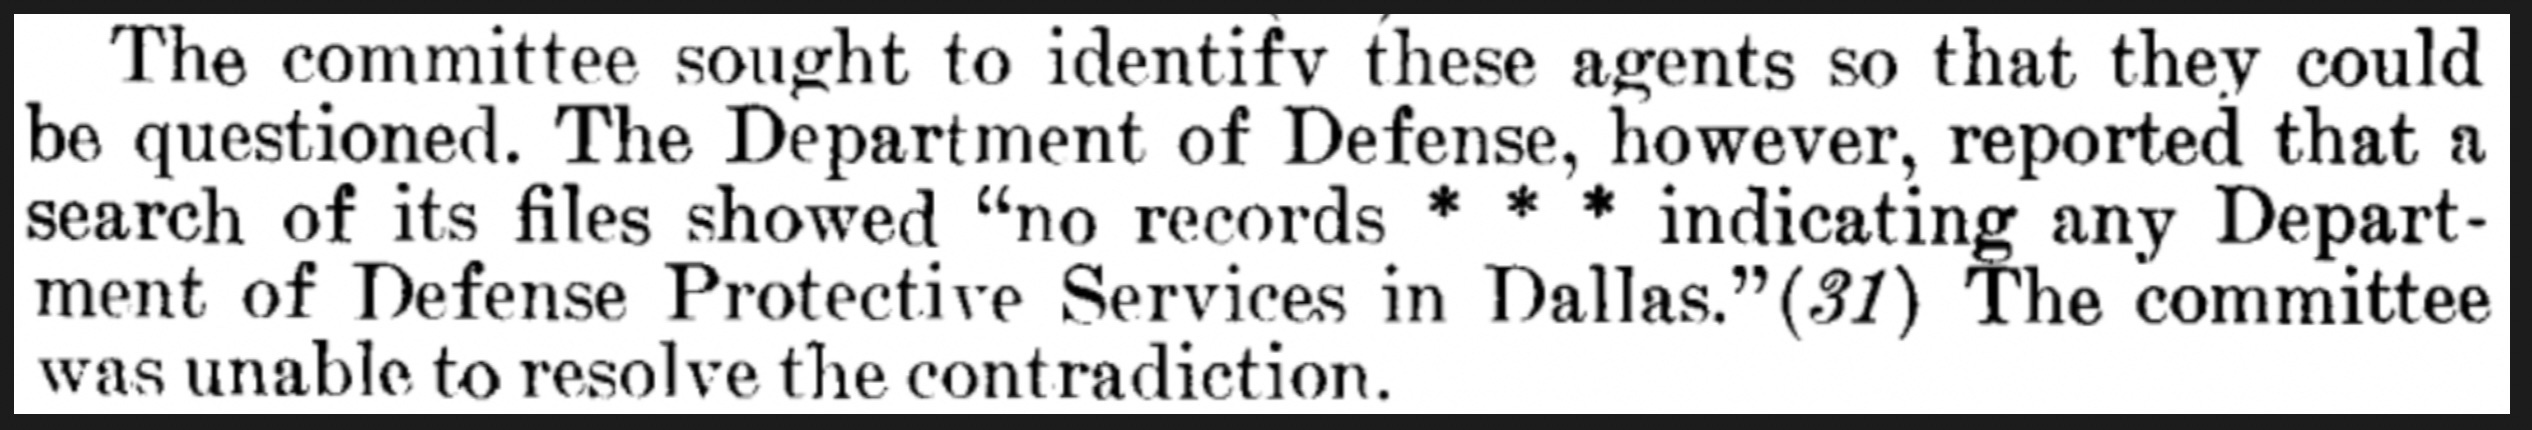 Trail of Destruction, Pt. 6: Oswald's Army Intelligence Dossier